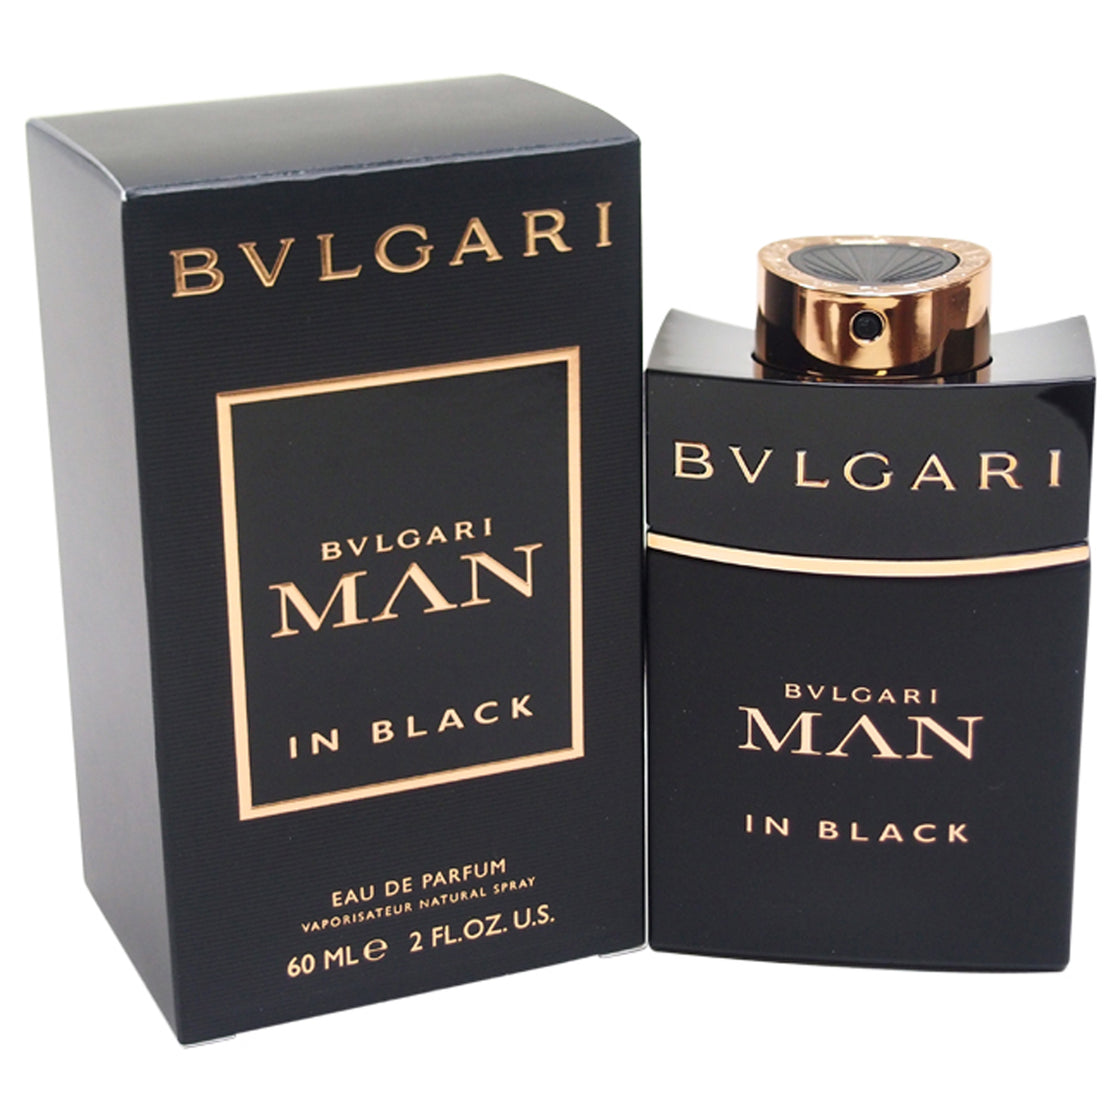 Bvlgari Man In Black by Bvlgari for Men - 2 oz EDP Spray